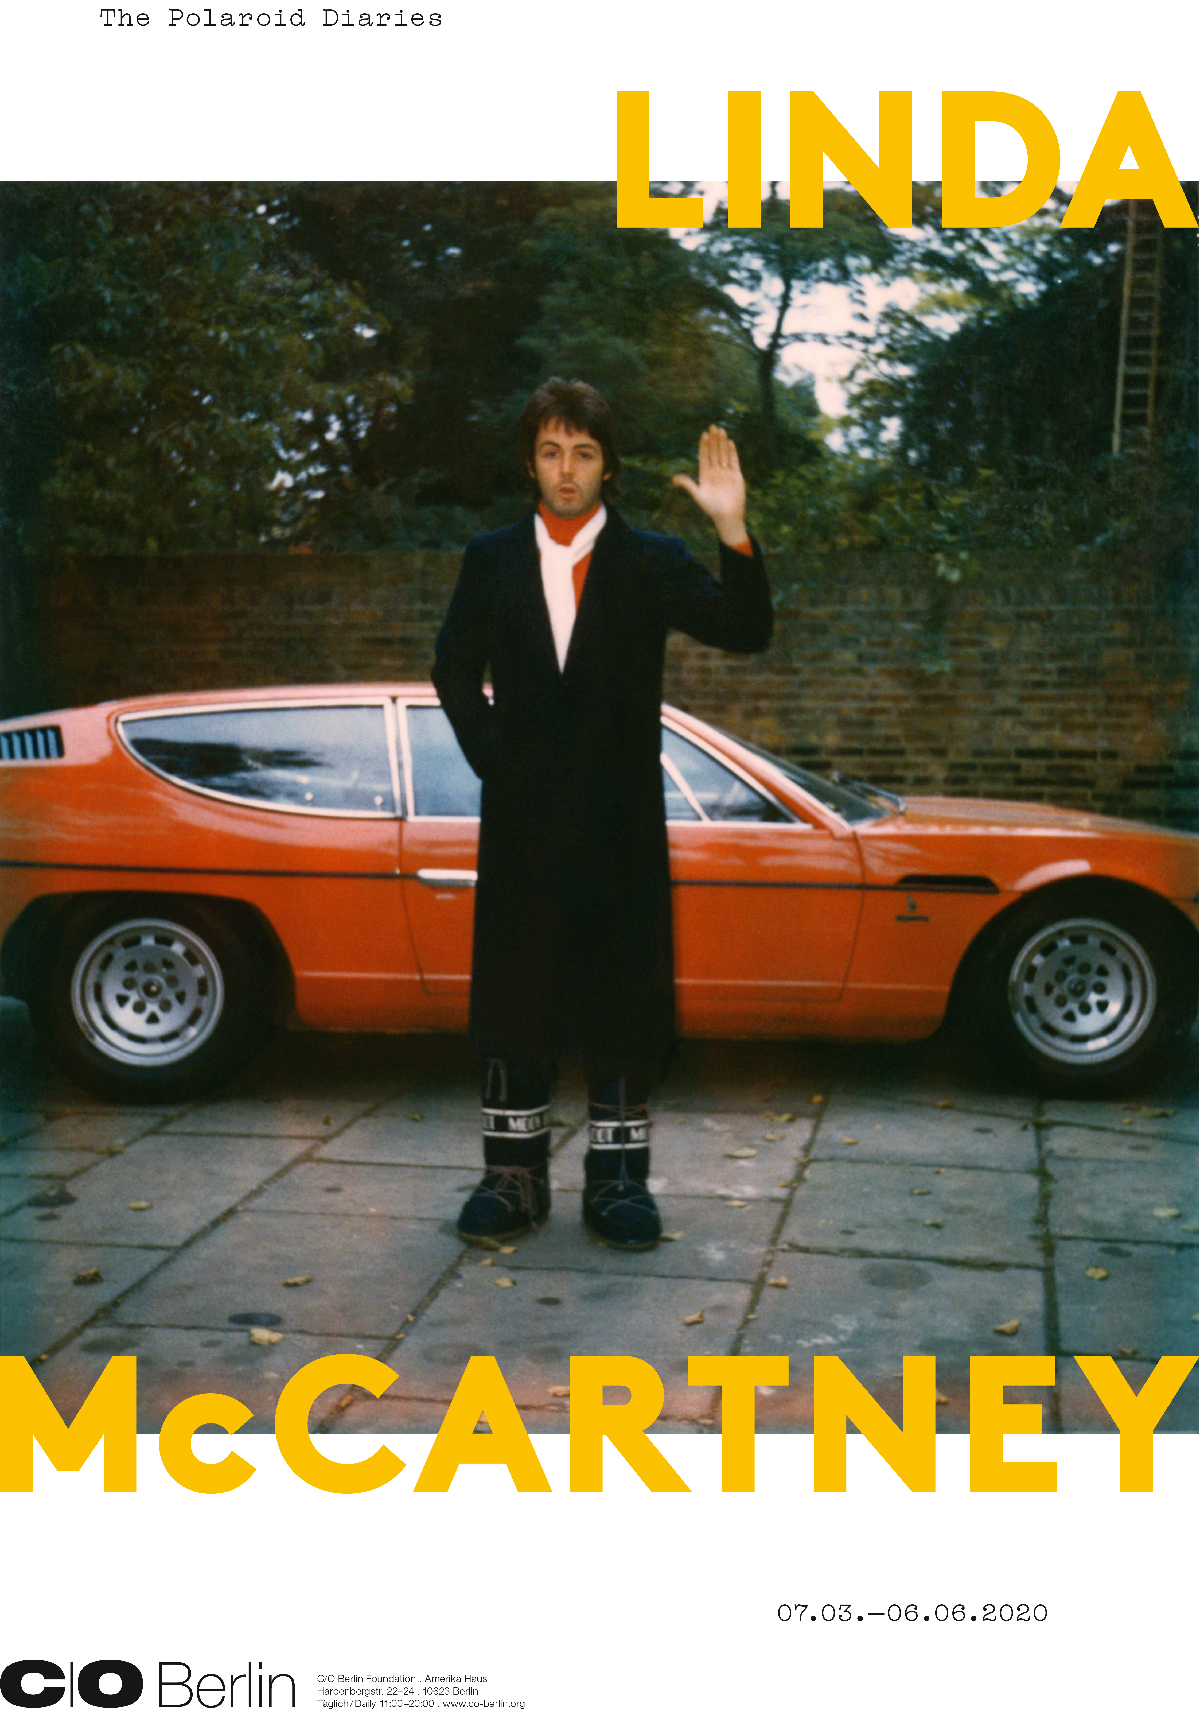 C/O Berlin to Present Linda McCartney . The Polaroid Diaries